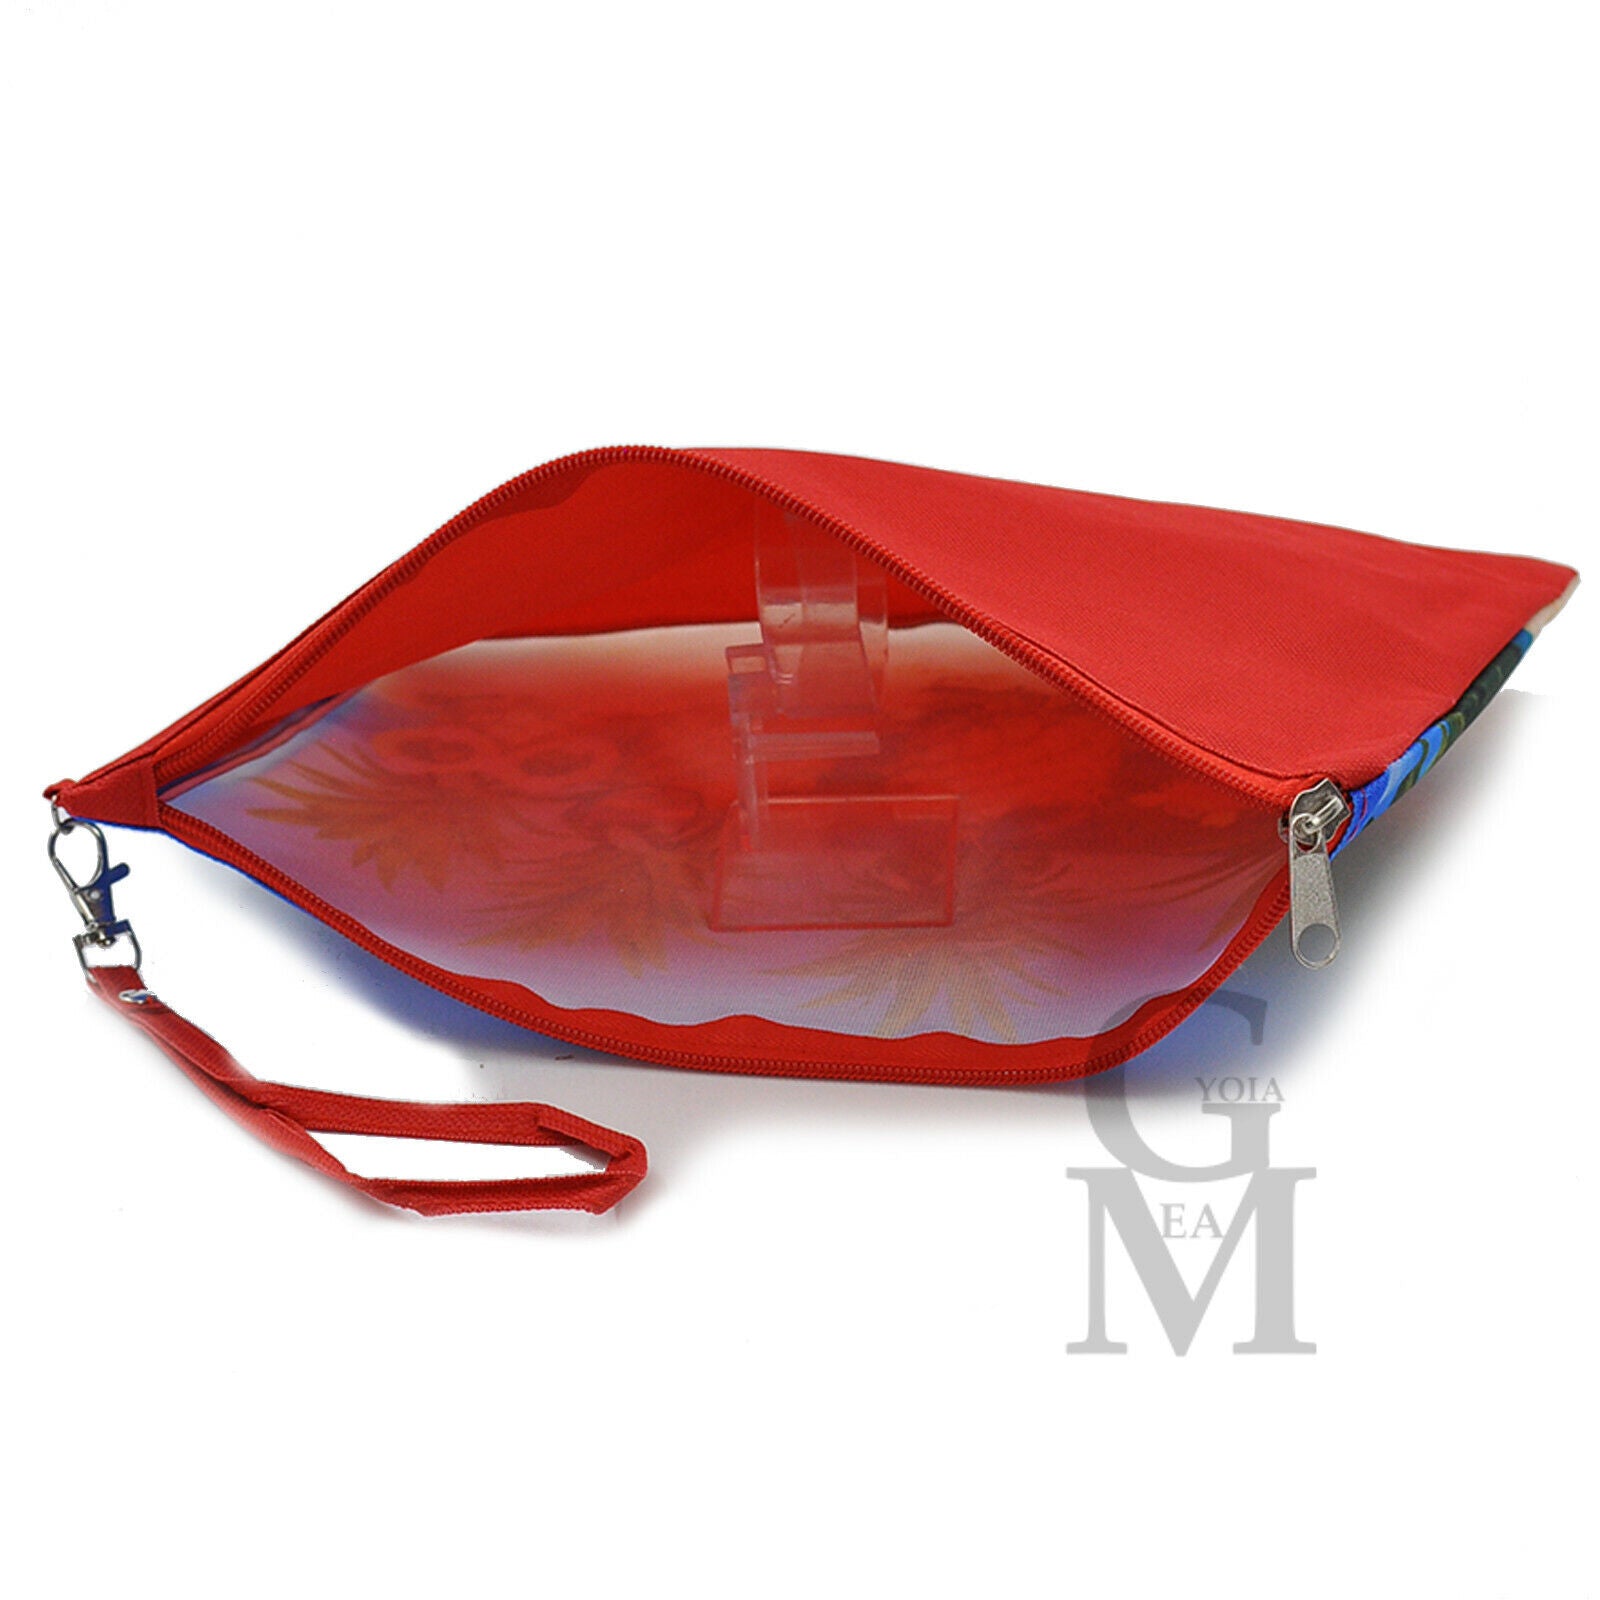 GM borsa mare piscina tela pochette borsetta tela nuovo tessuto disegn –  Gyoiamea